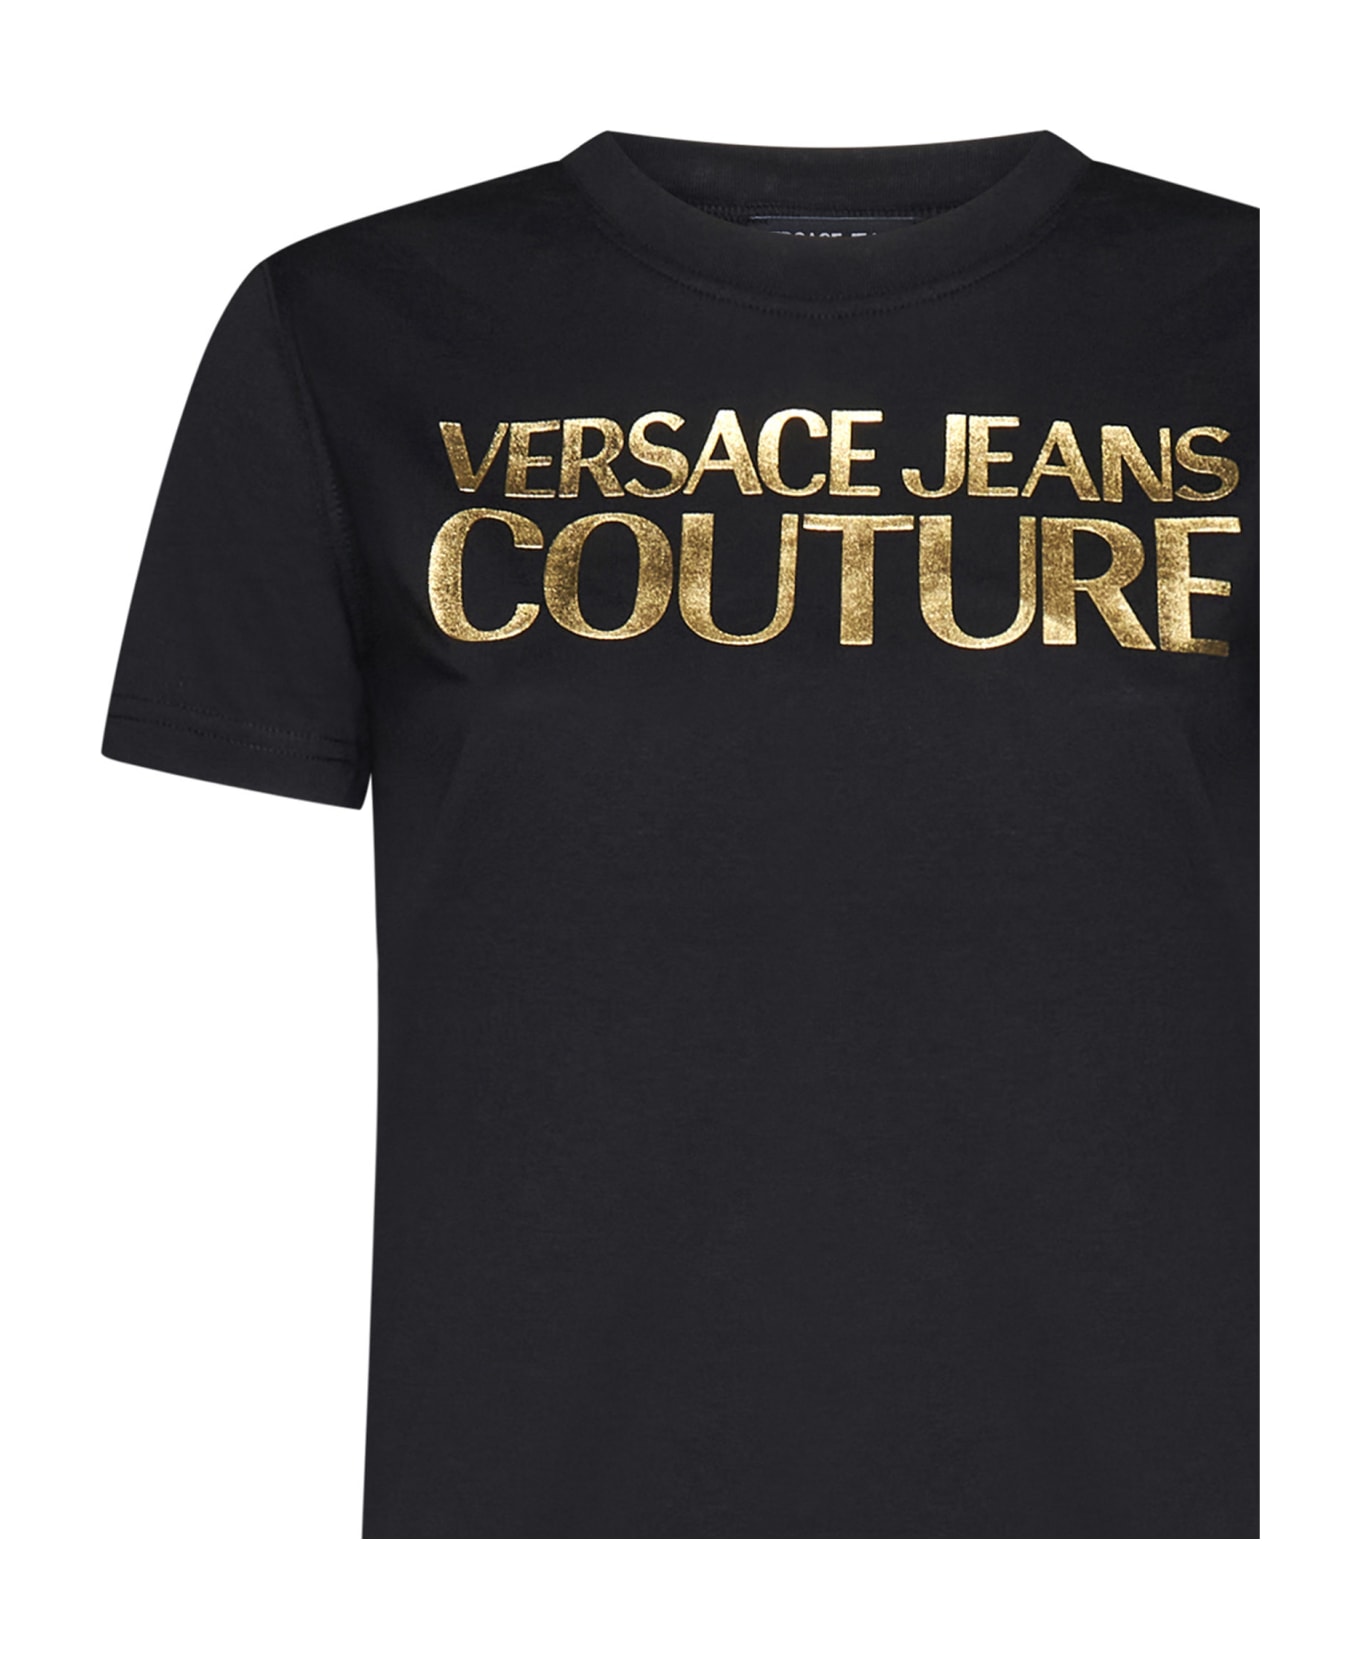 Versace Jeans Couture Logo T-shirt - Black/gold